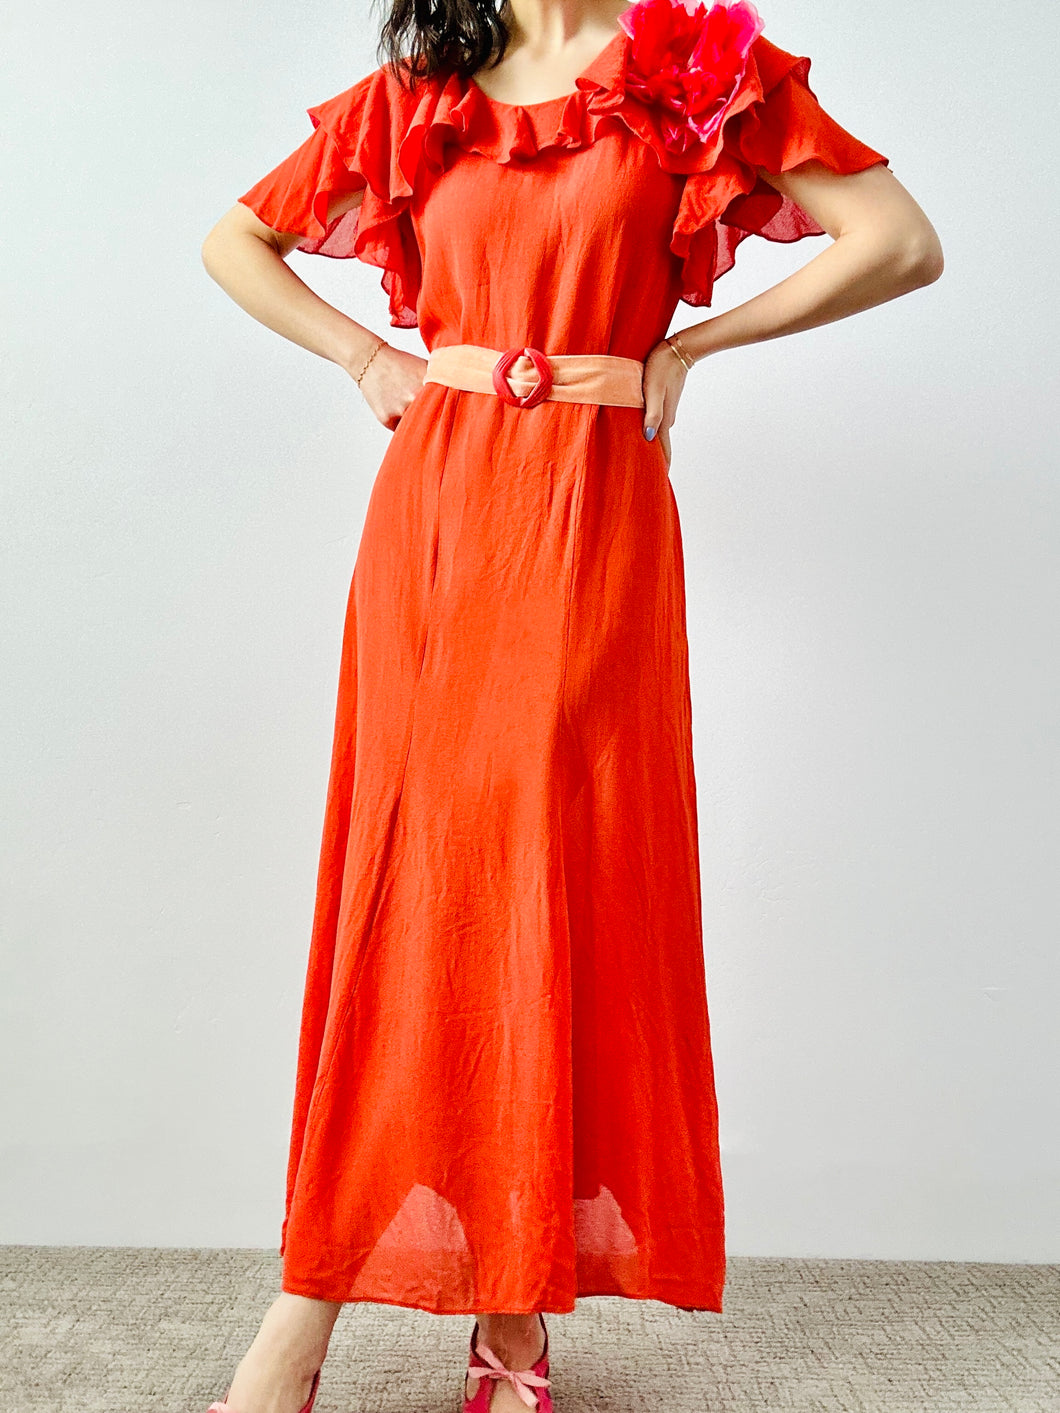 Vintage 1930s coral color silk dress